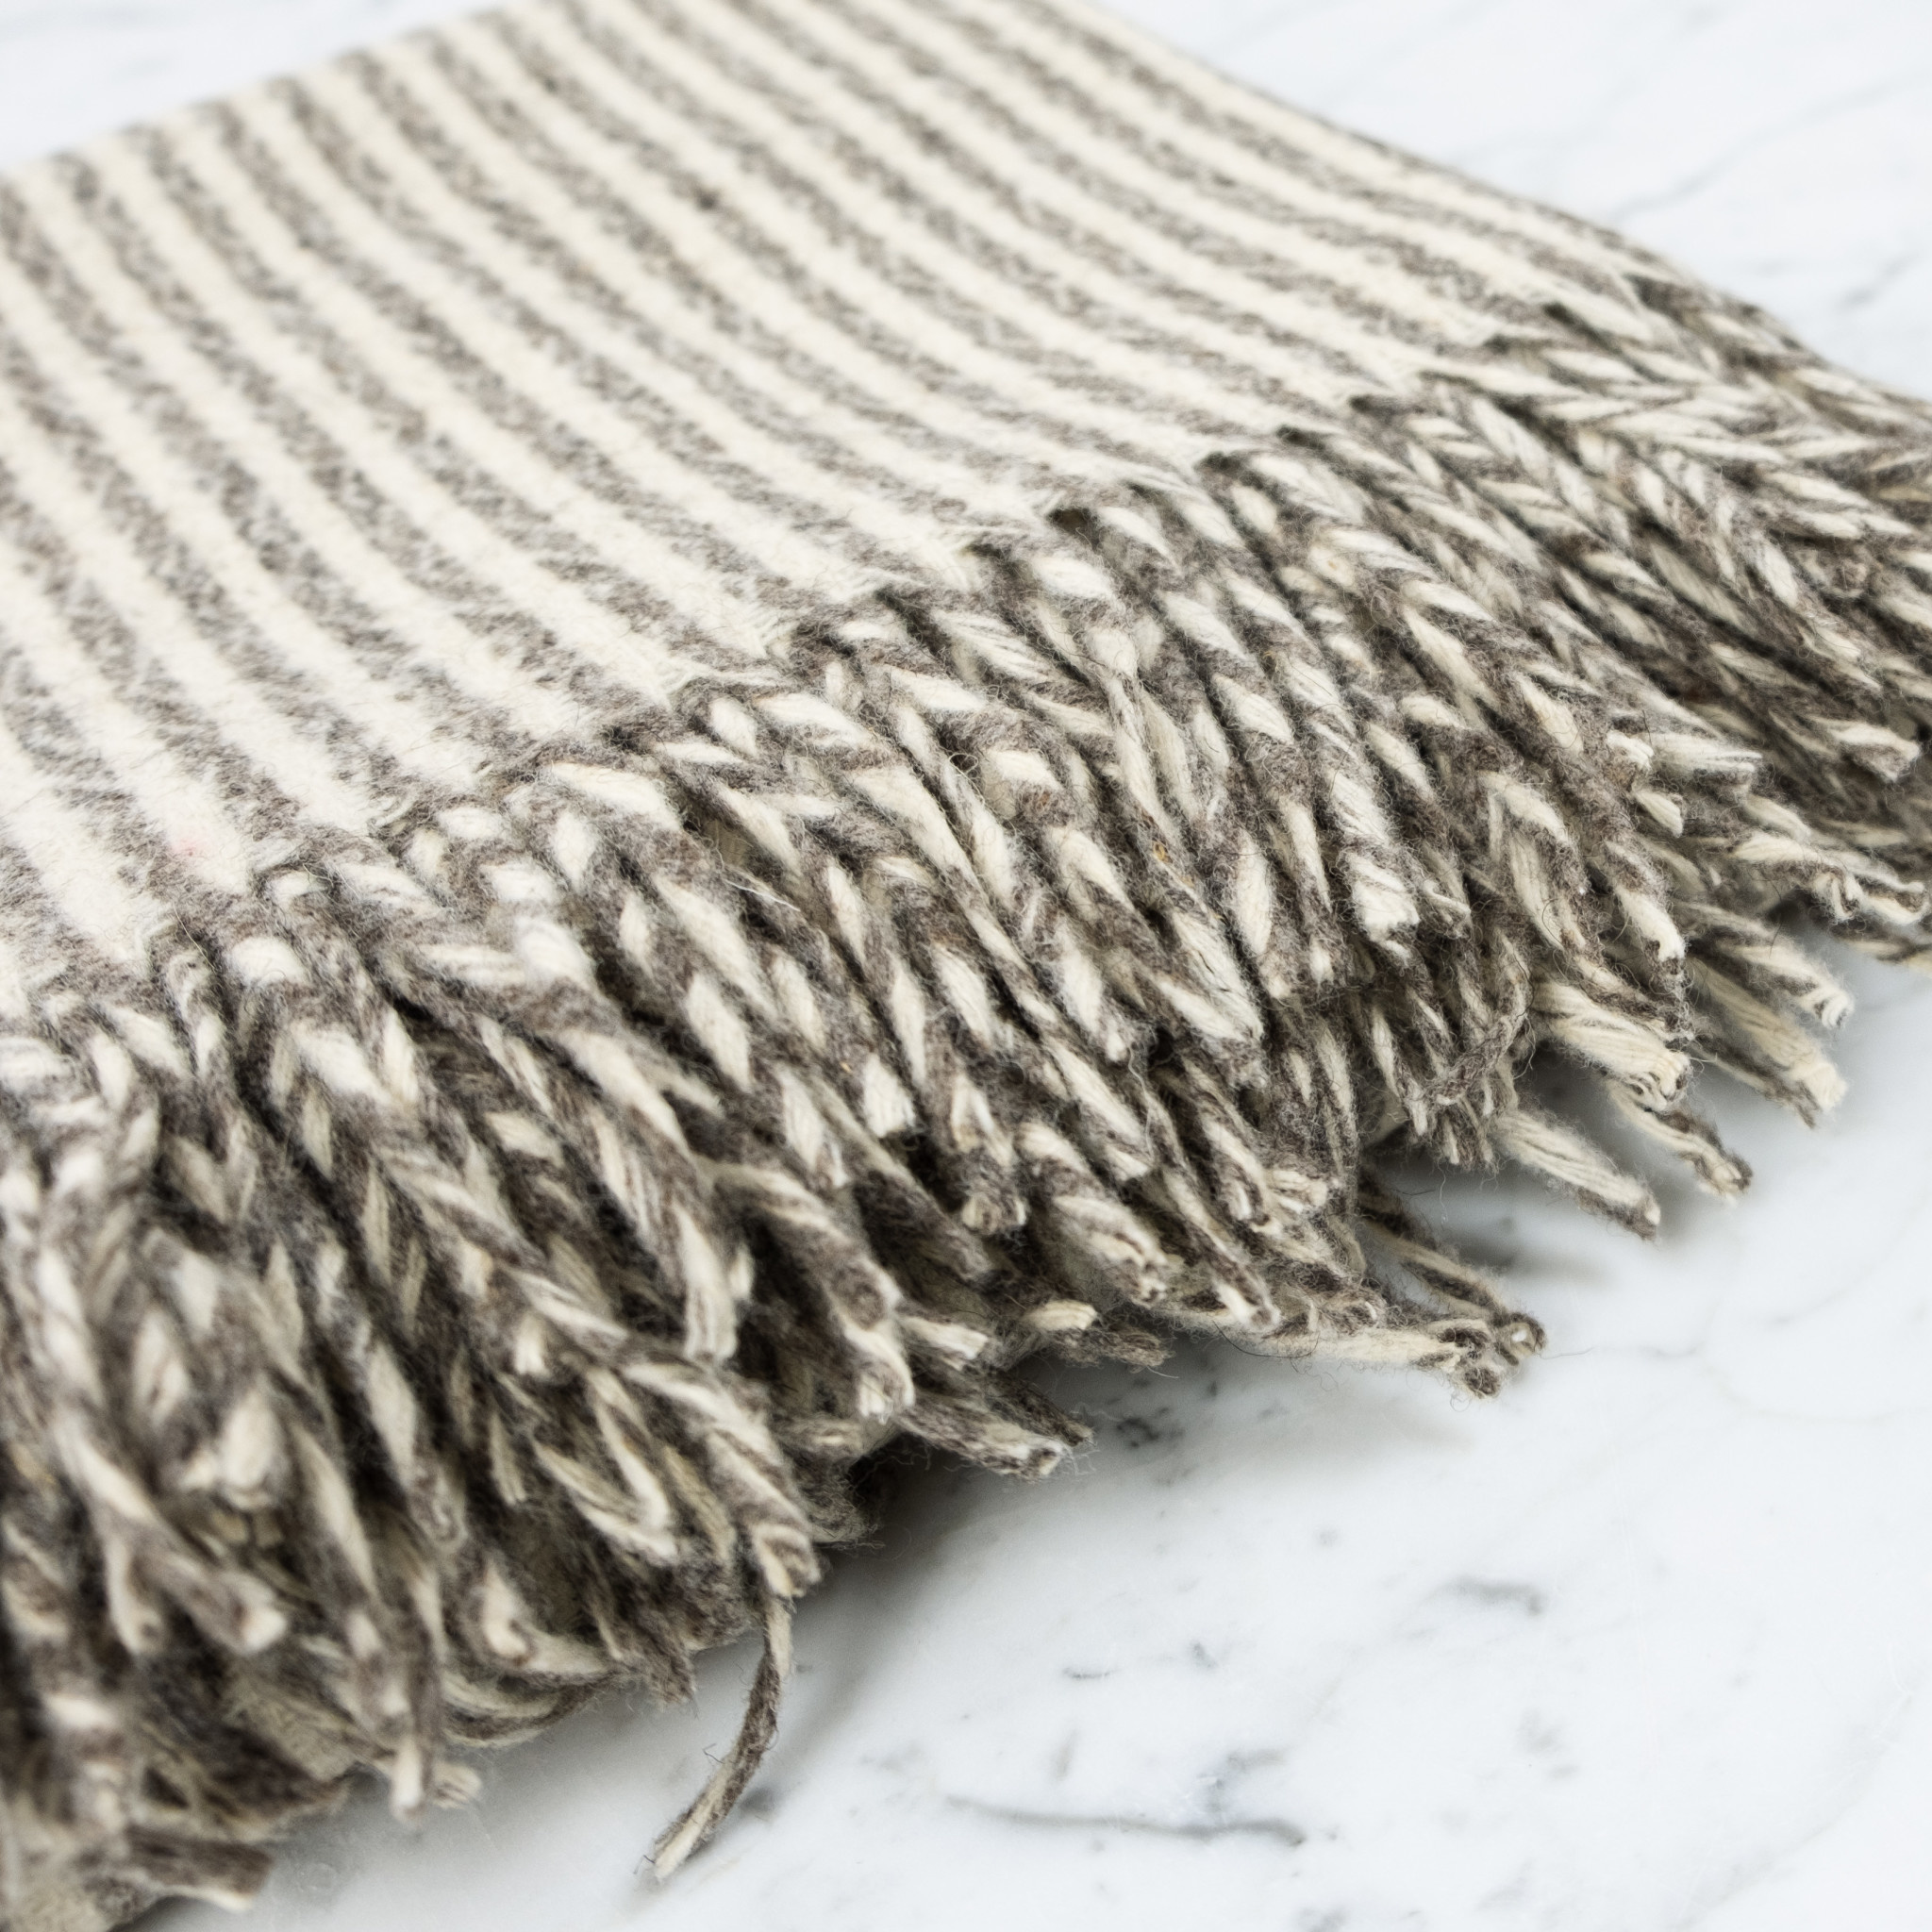 Rustic Wool Blanket - Grey Thin Stripe